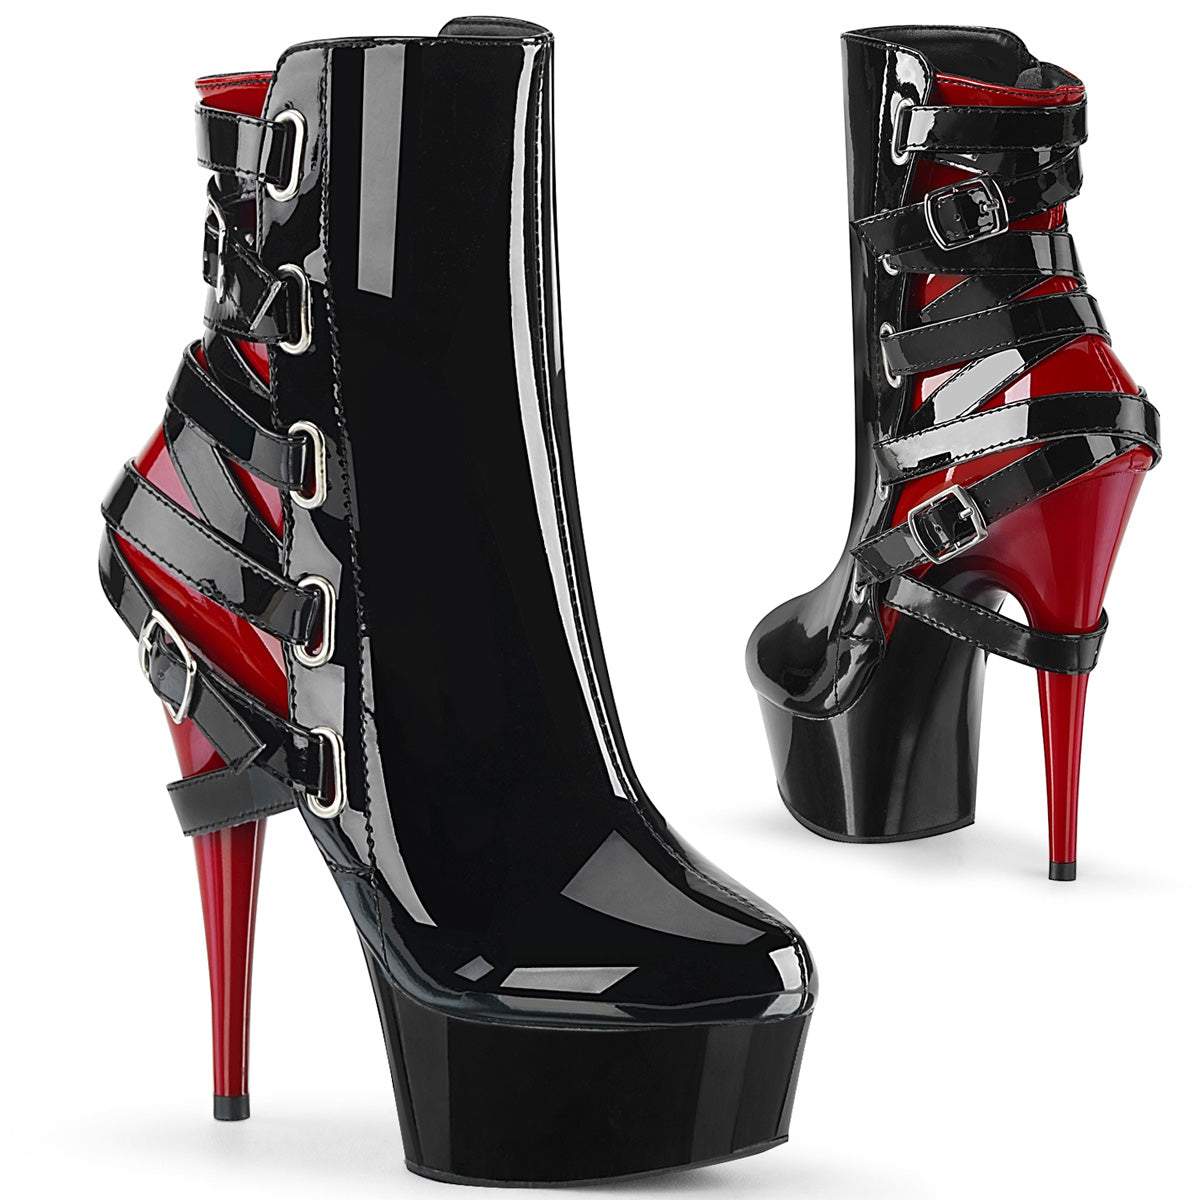 DELIGHT-1012 6" Heel Black and Red  Stripper Platforms High Heels